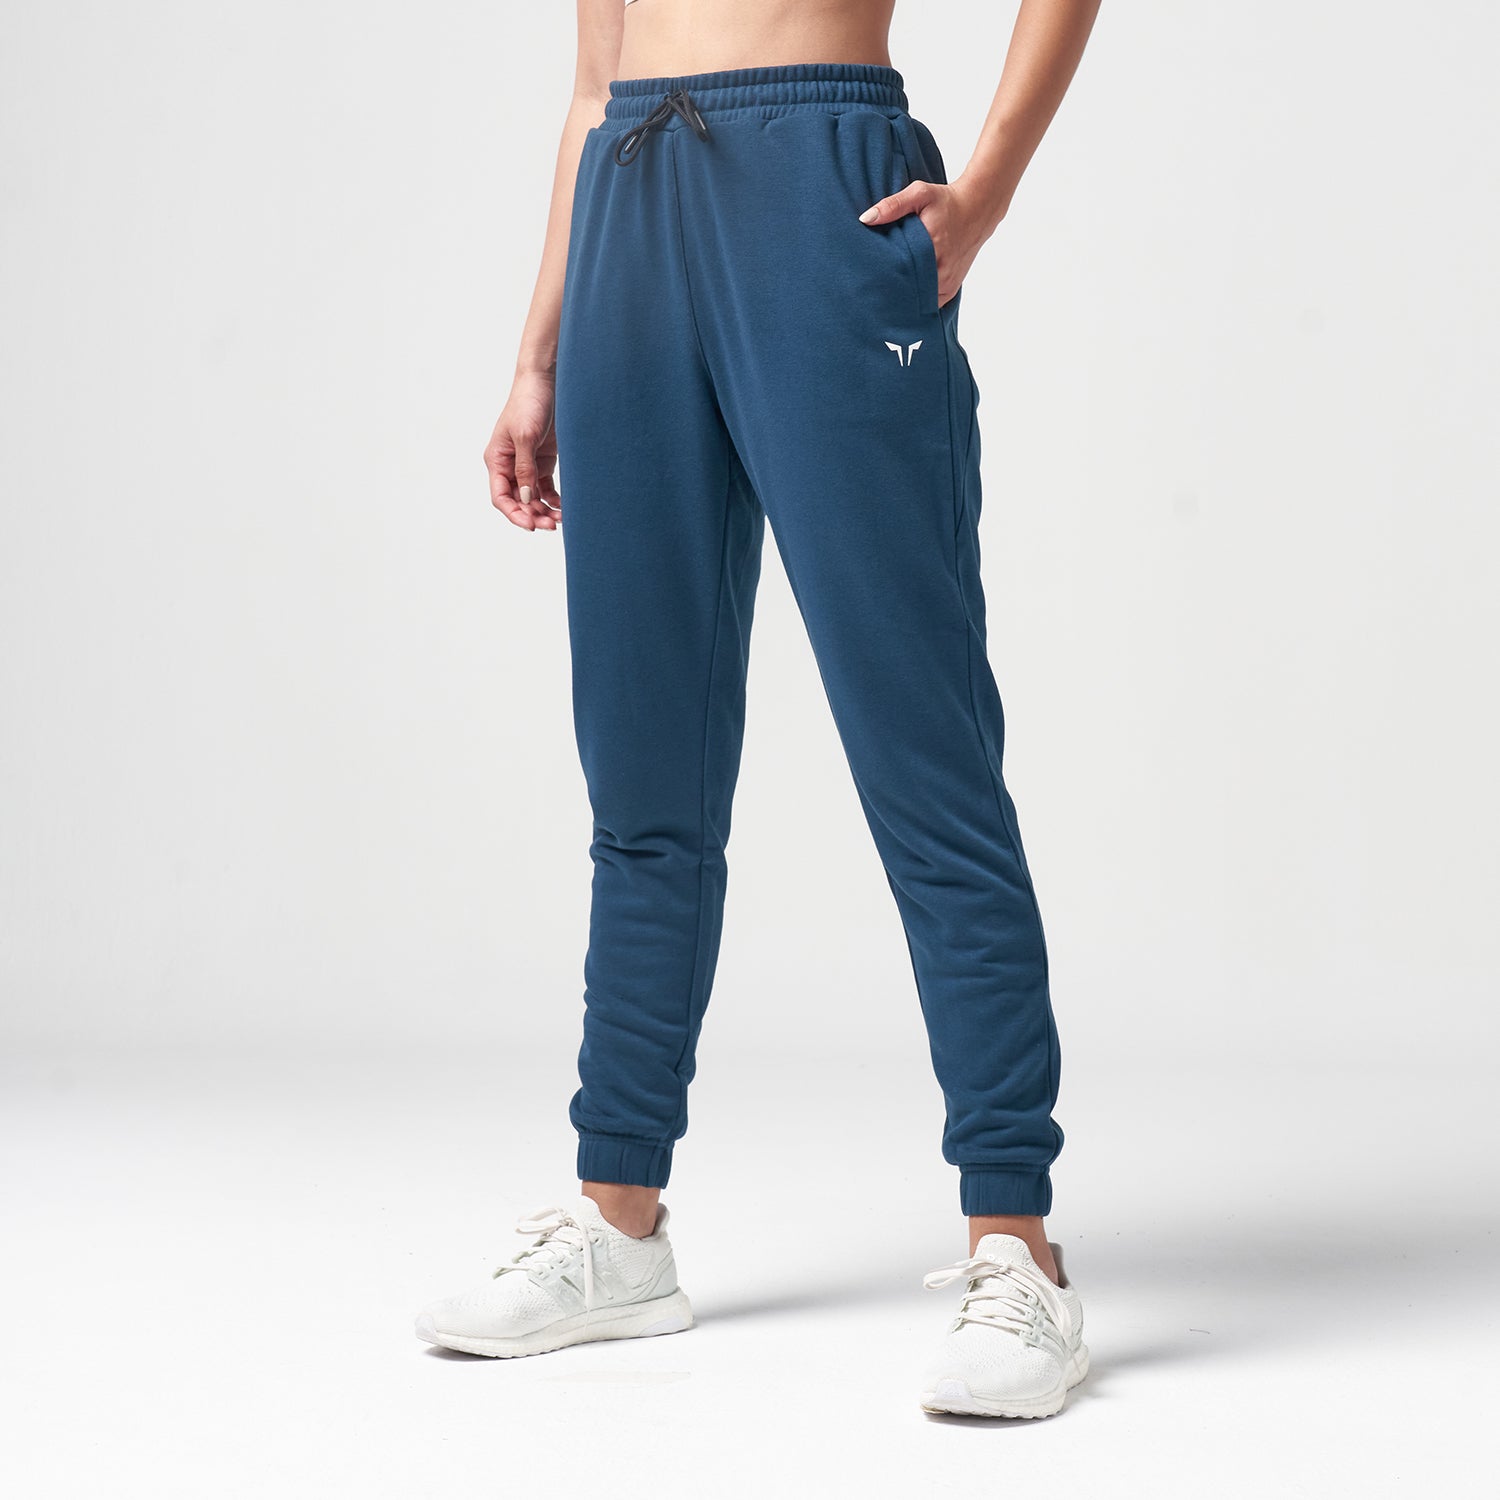 Dalia Ladies' Lightweight Pull-On Pant, Blue Grey, X-Large